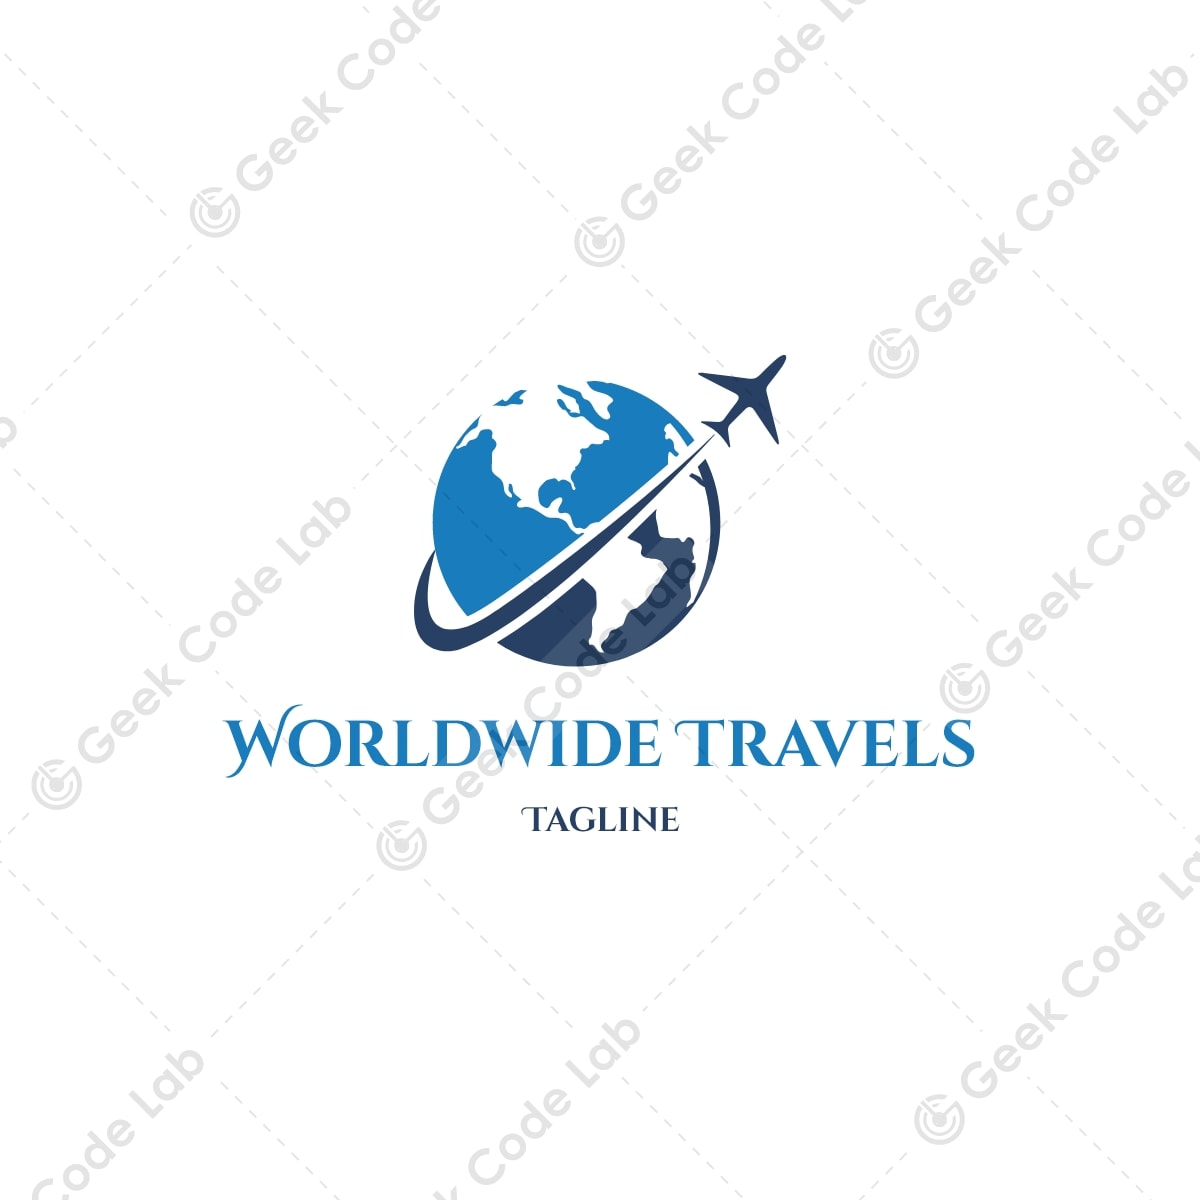 Worldwide Travels